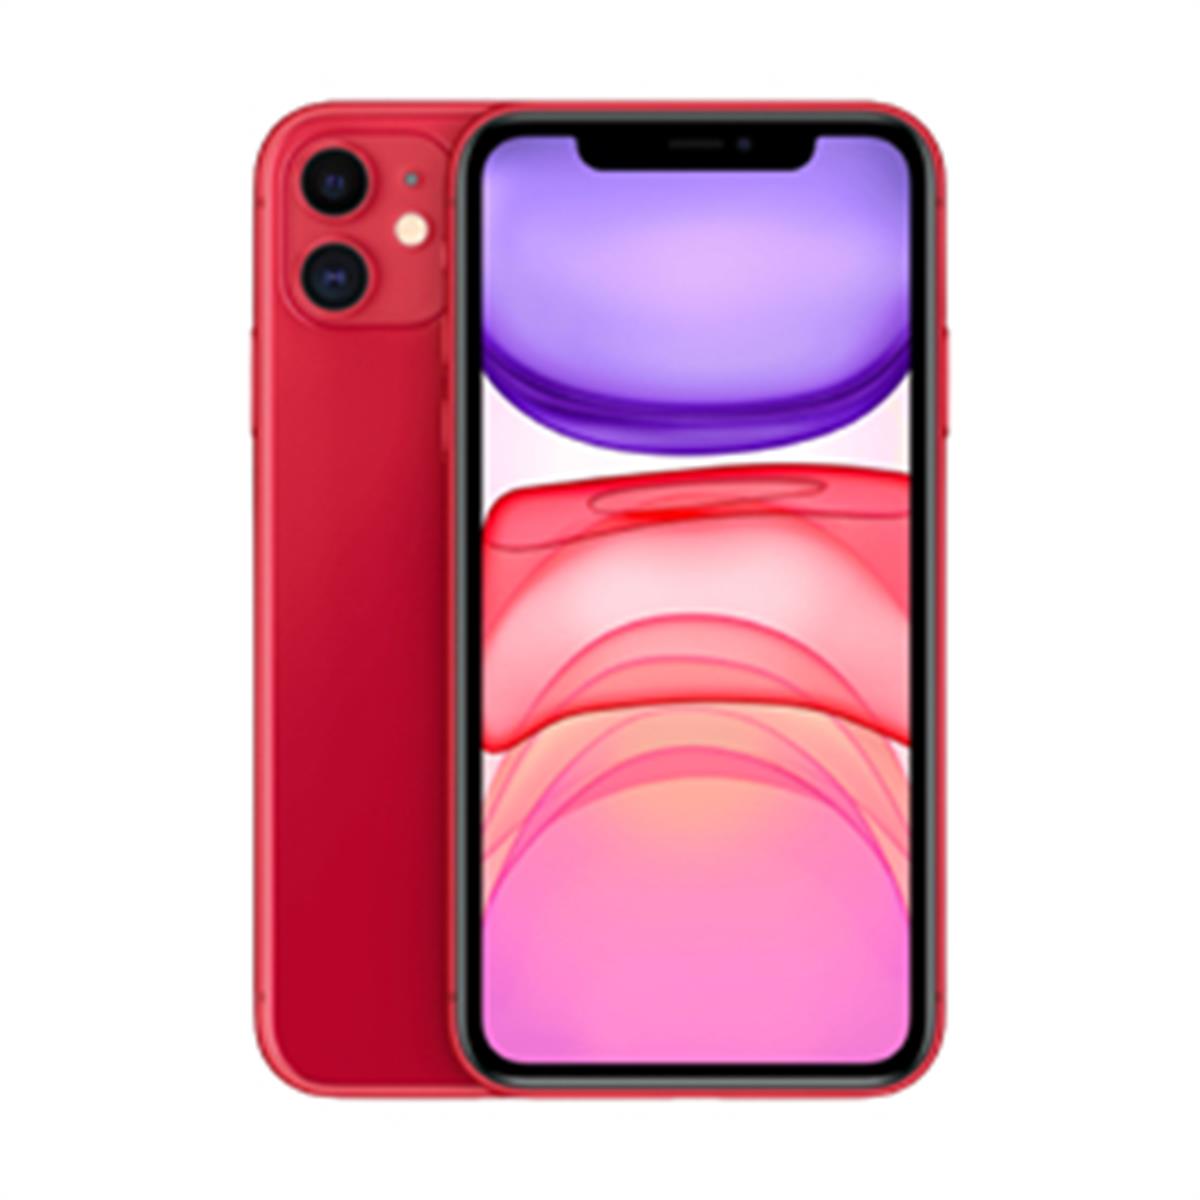 Yenilenmiş iPhone 11 64 GB Kırmızı Satın Al | Novomobil